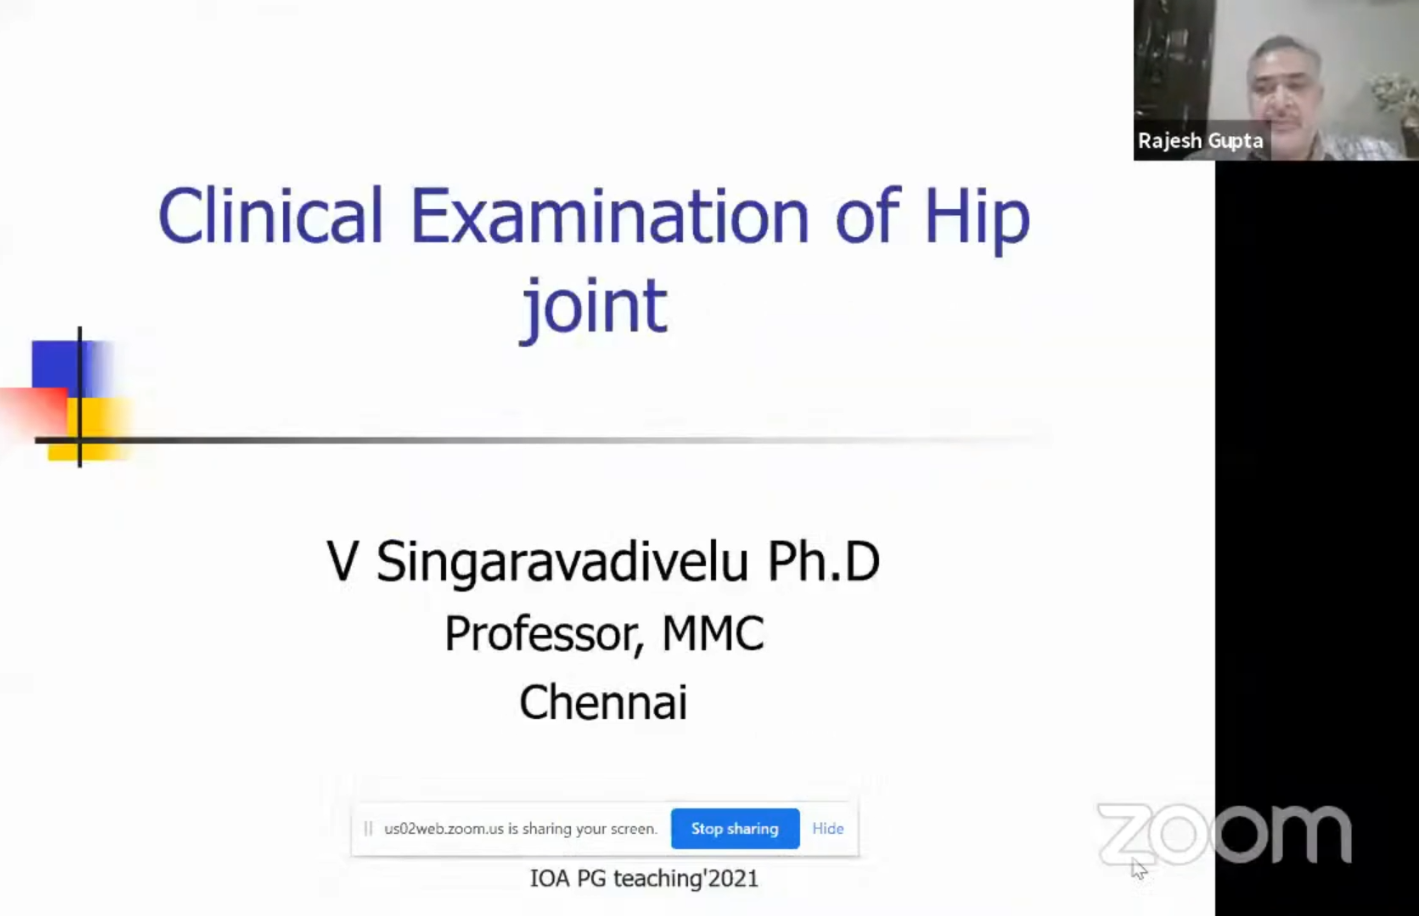 Clinical Examination of HIP Joint - Dr V Singaravadivelu Ph D